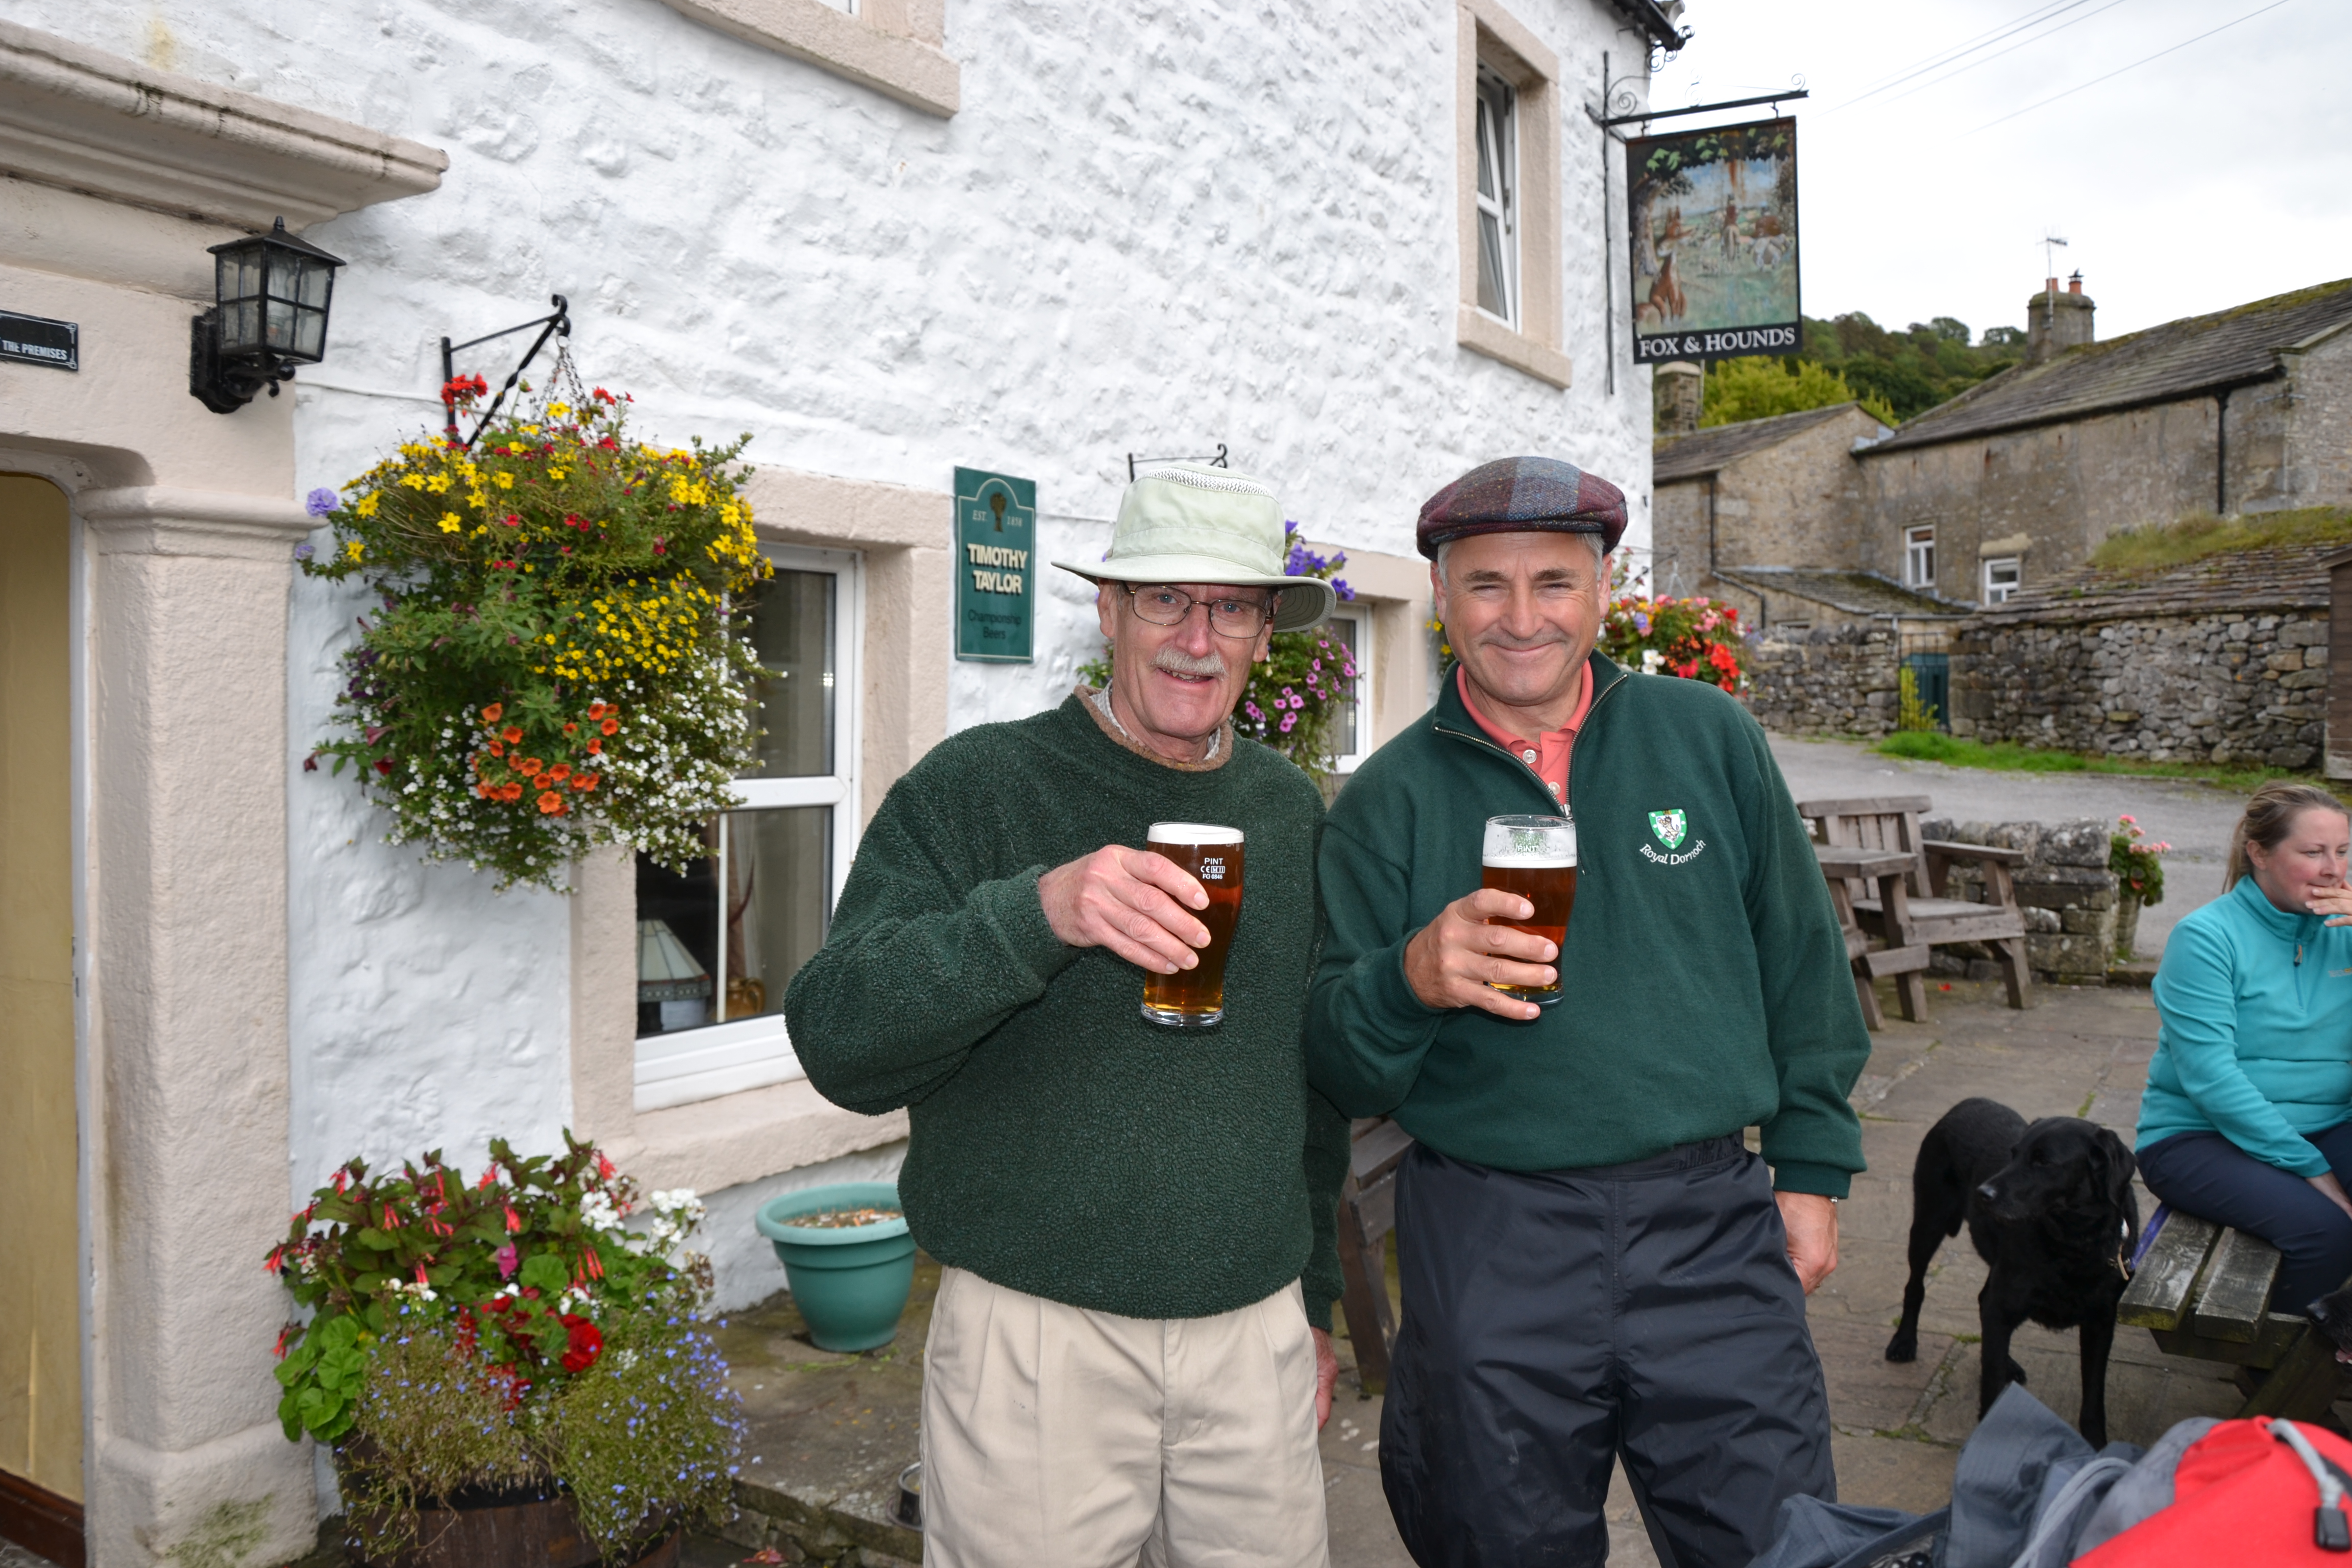 2 Gentlemen enjoying a pint at the Fox and Houds pub